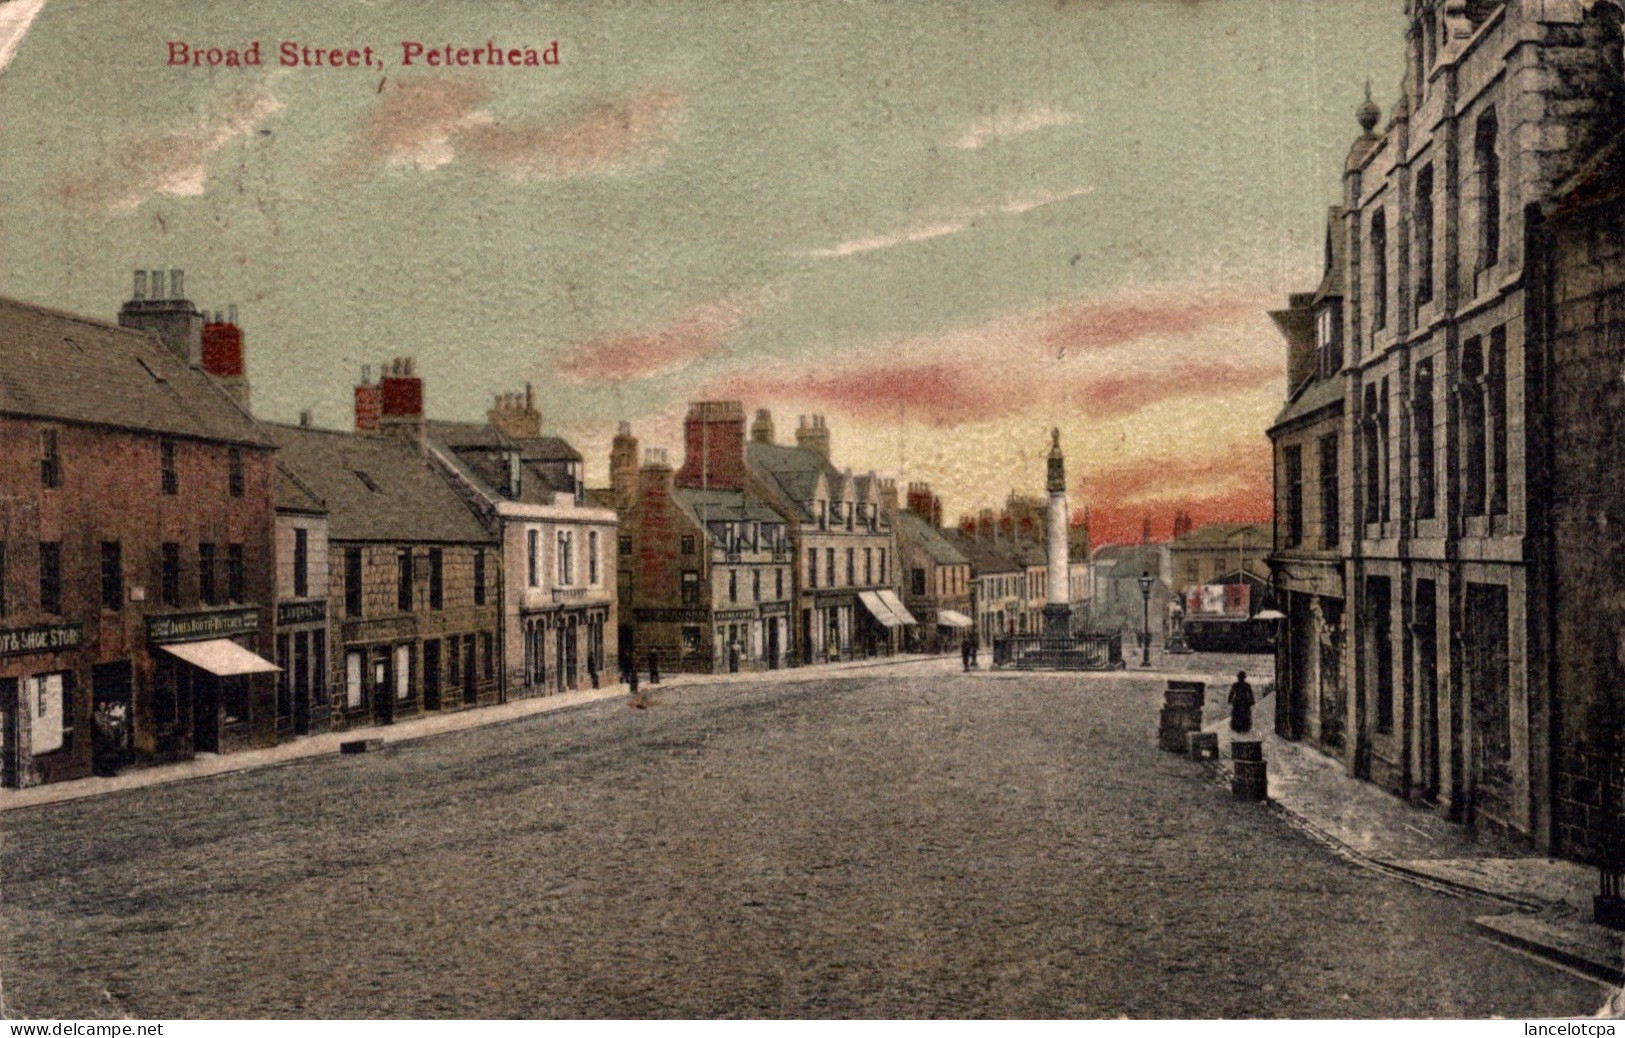 BROAD STREET - PETERHEAD - Aberdeenshire